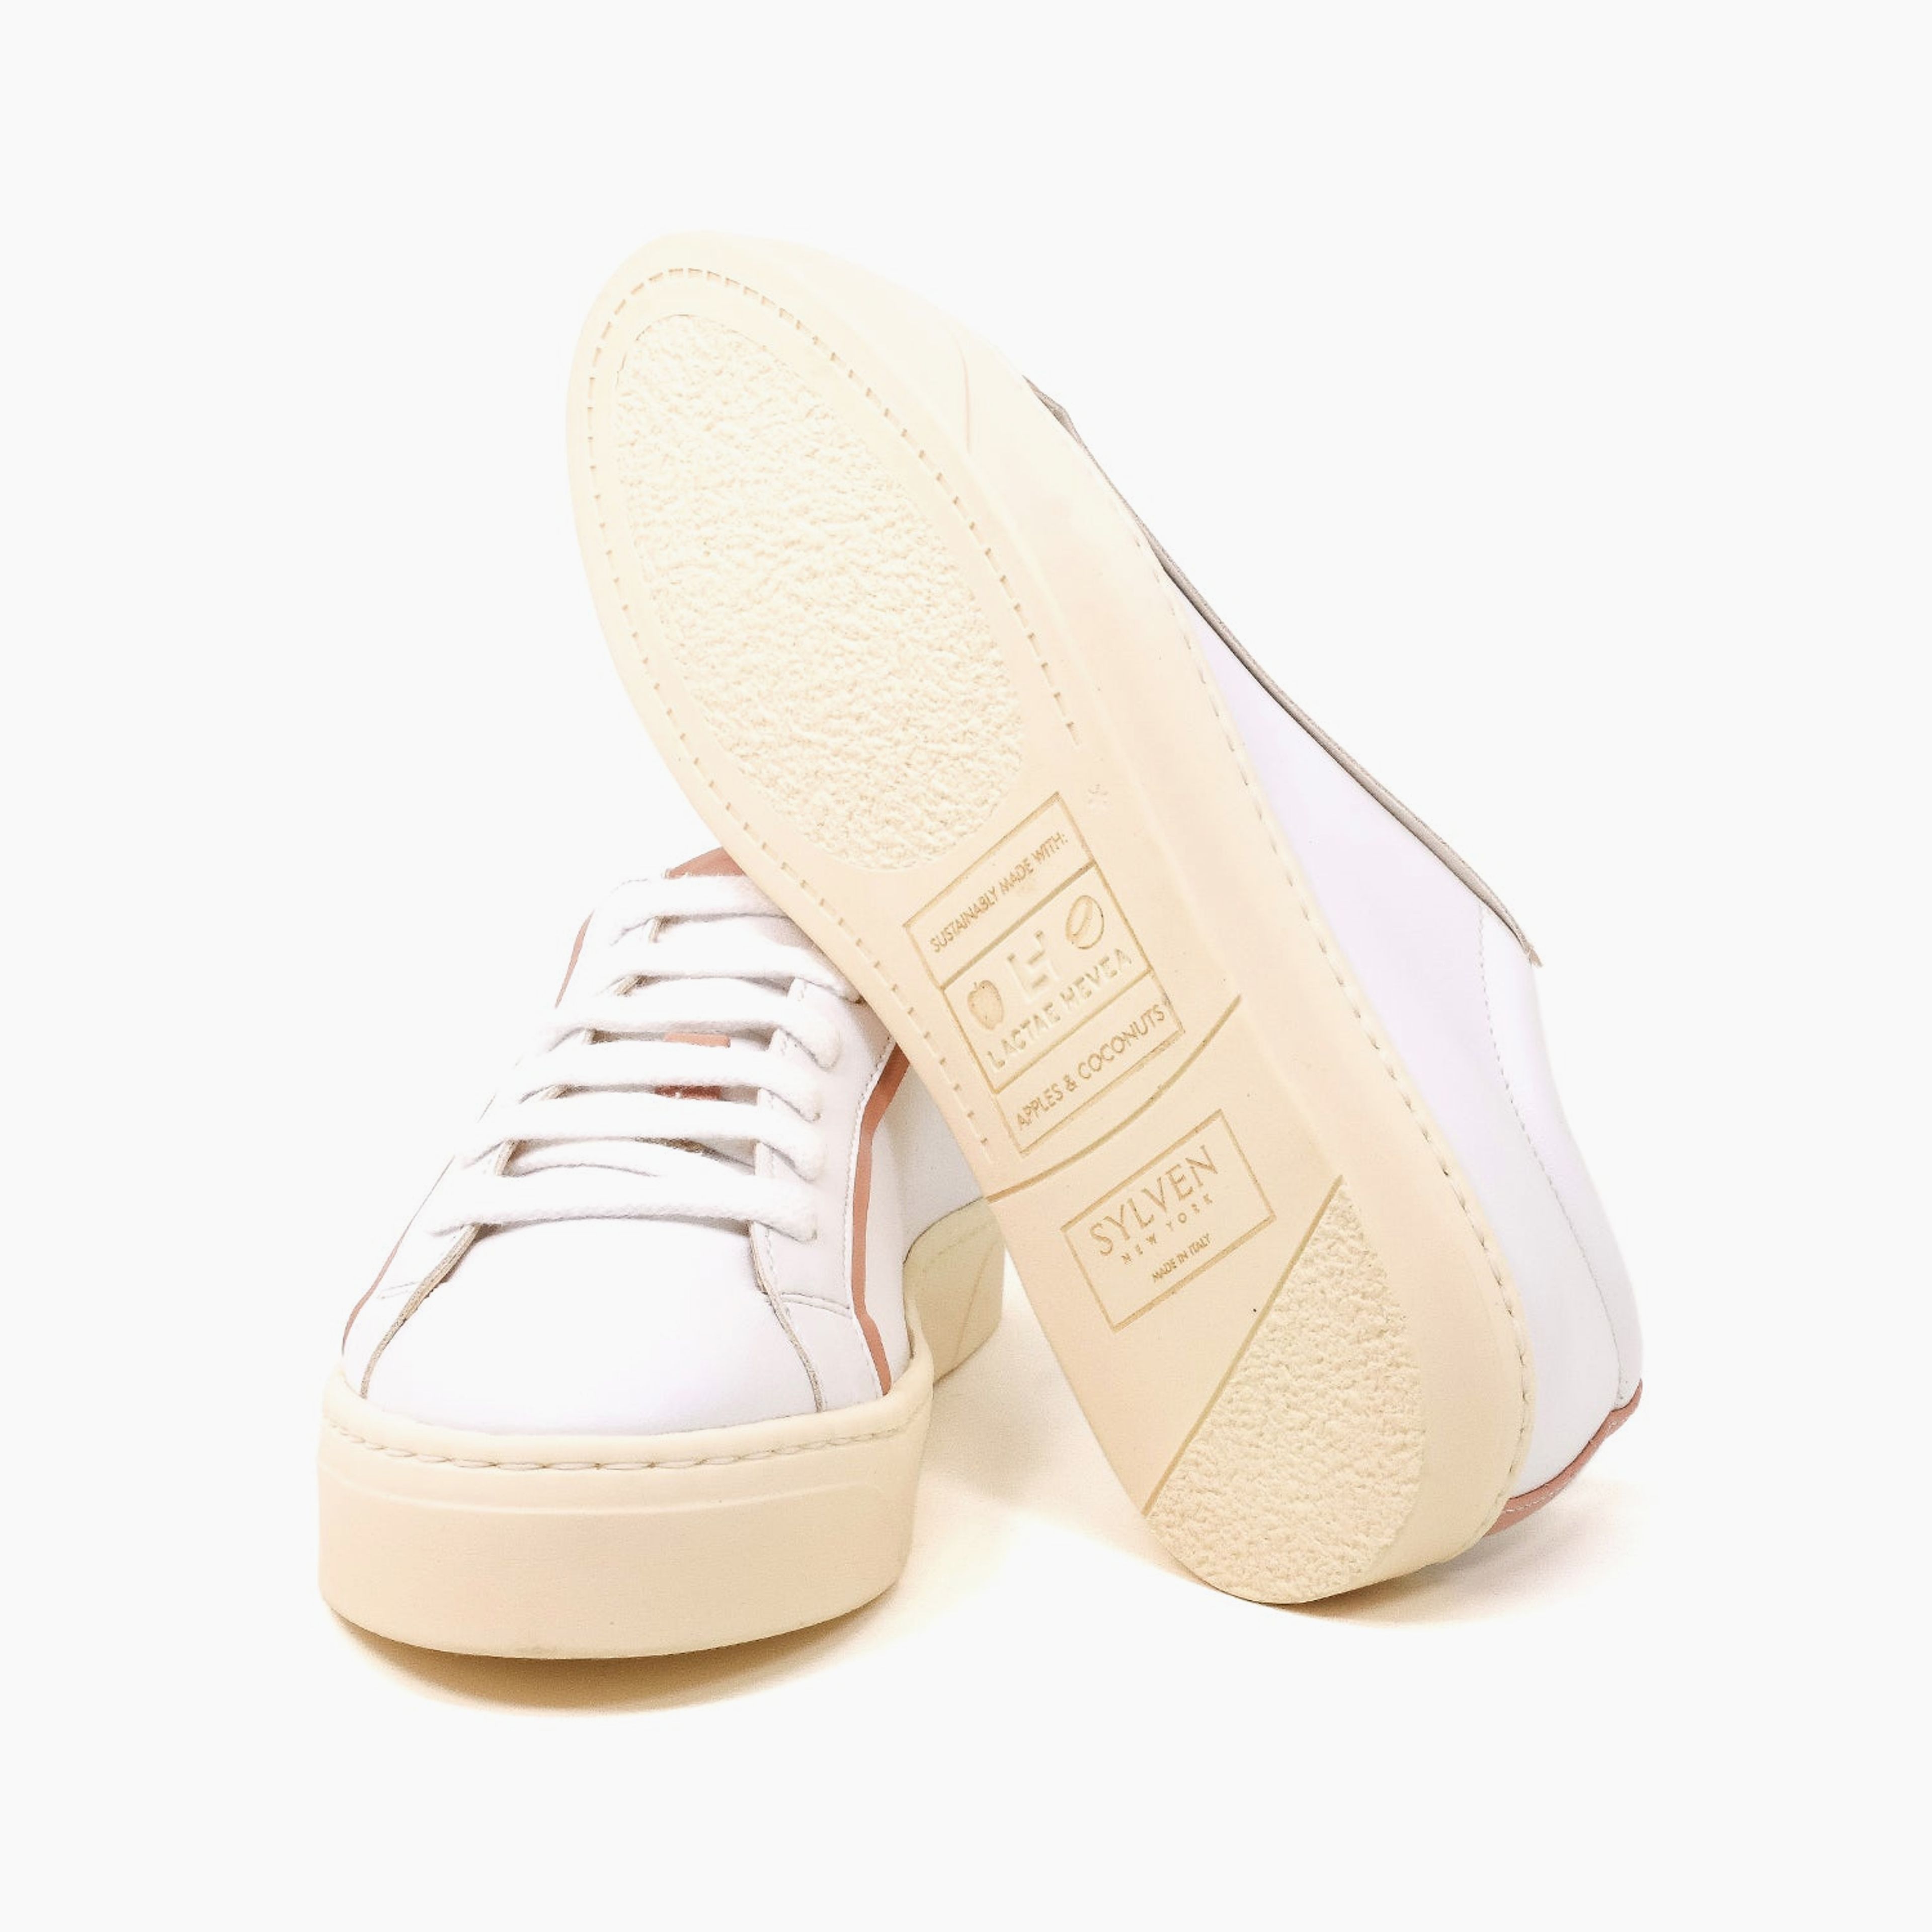 MEL white/rose vegan apple leather sneakers